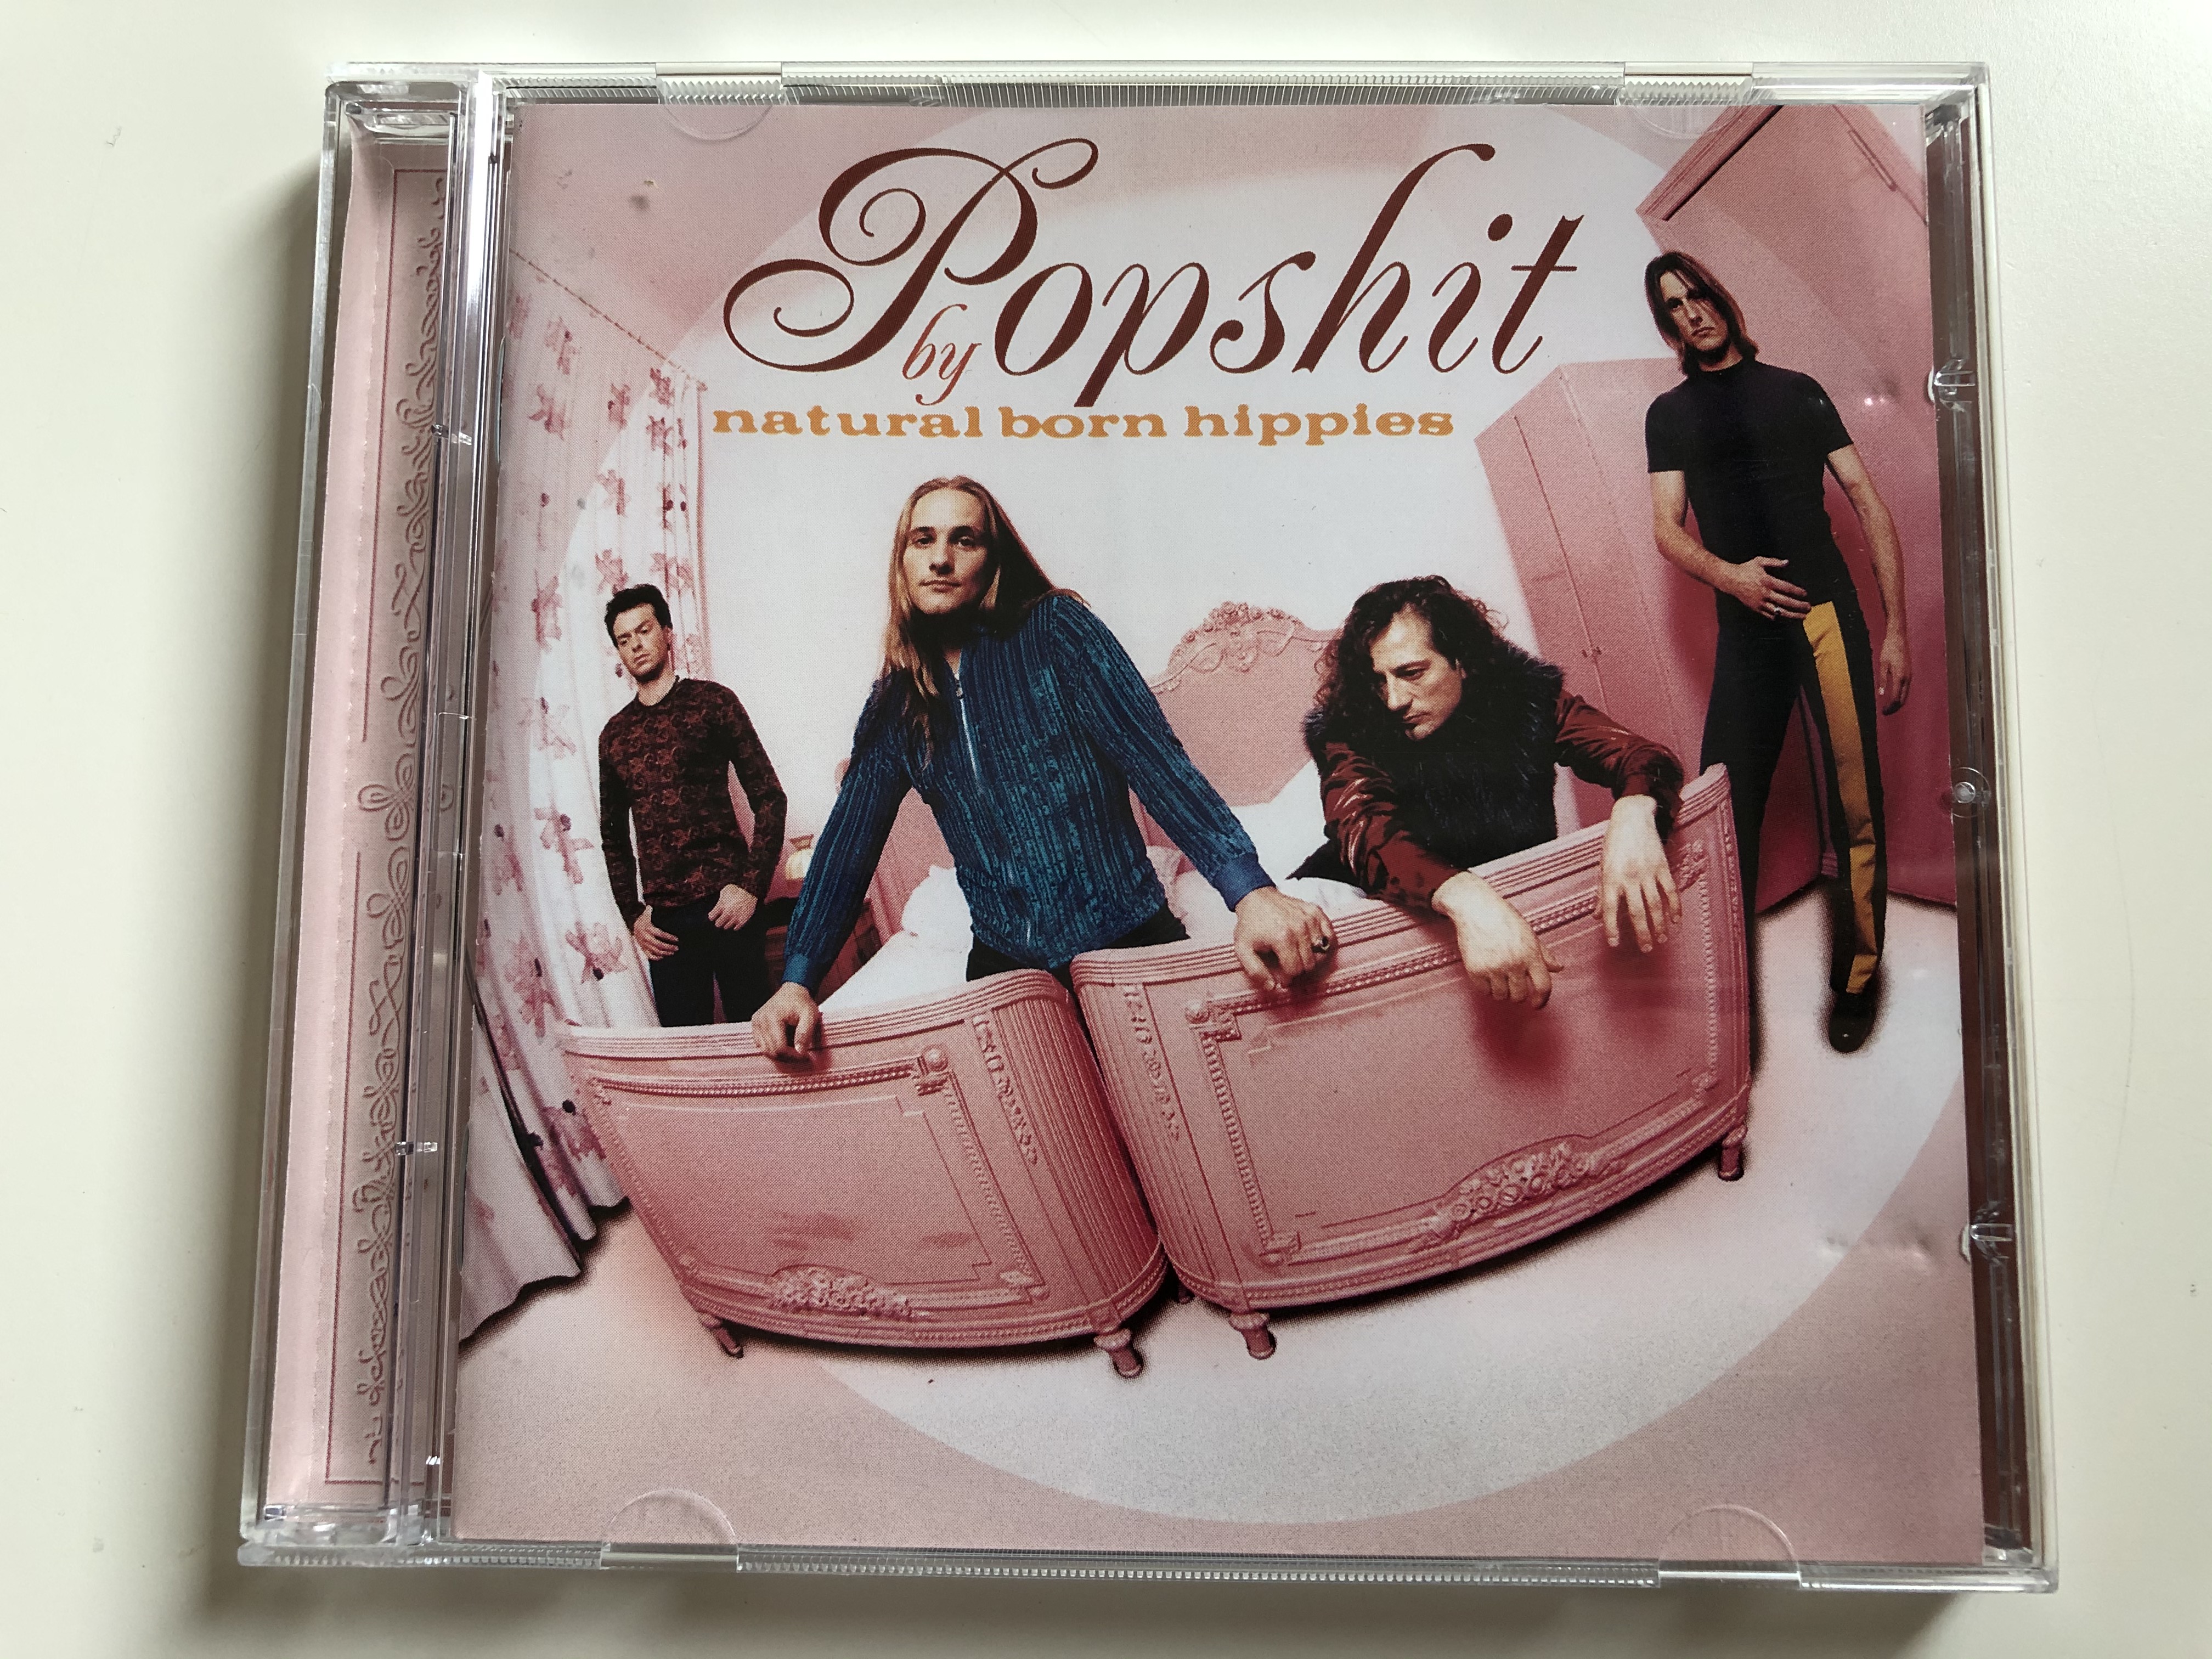 popshit-by-natural-born-hippies-rca-audio-cd-1999-74321-64366-2-1-.jpg